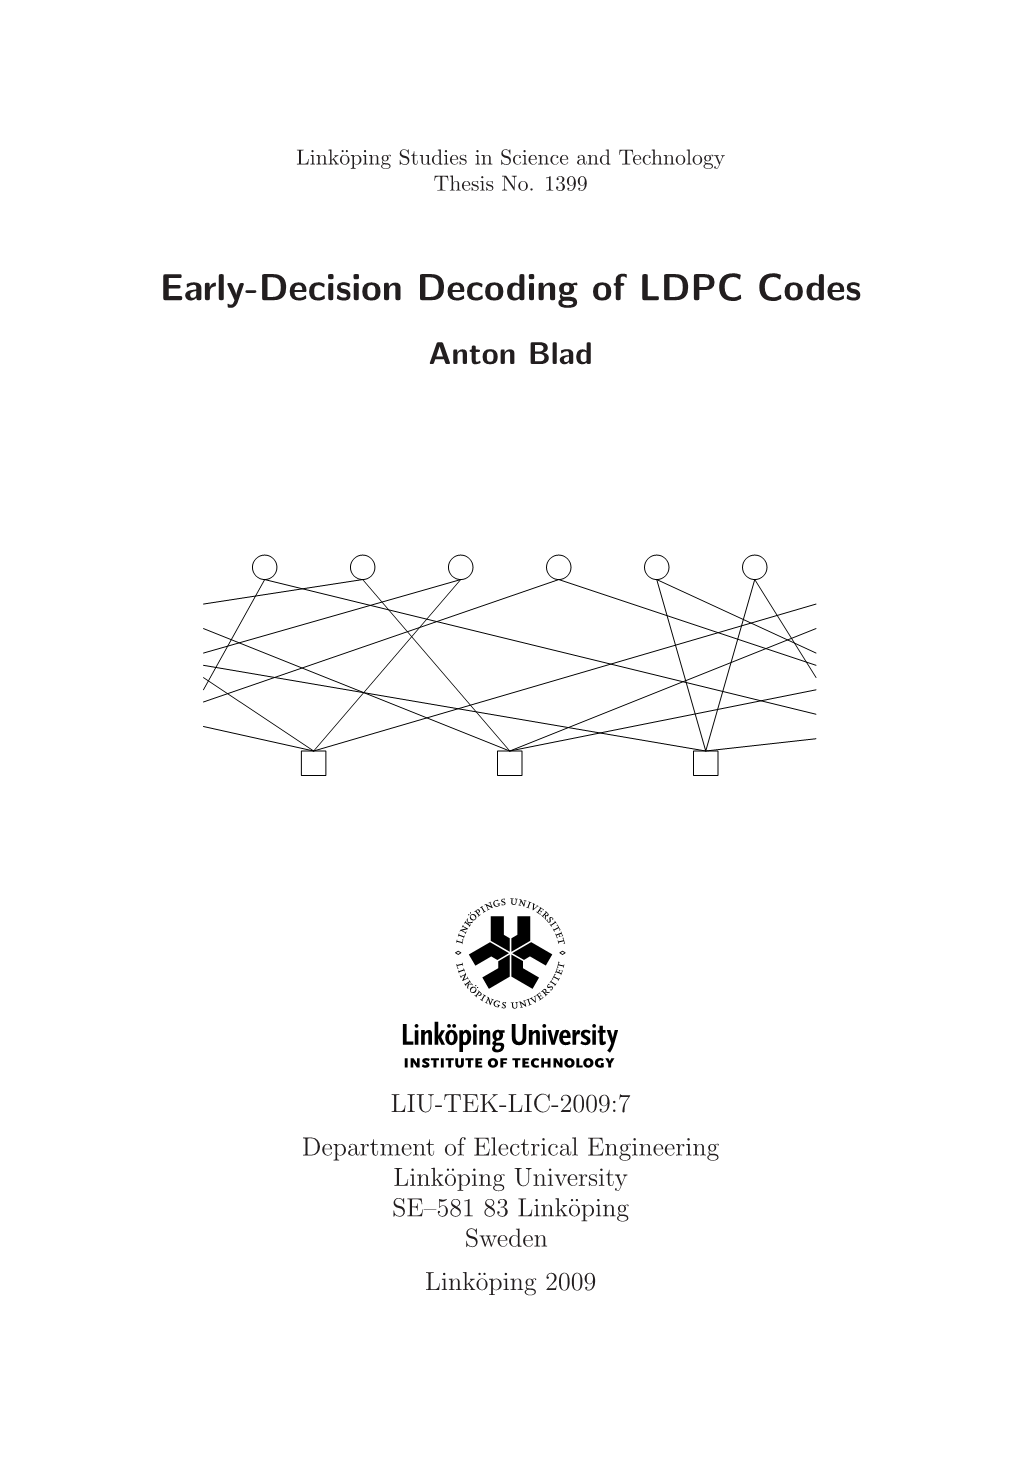 Early-Decision Decoding of LDPC Codes Anton Blad